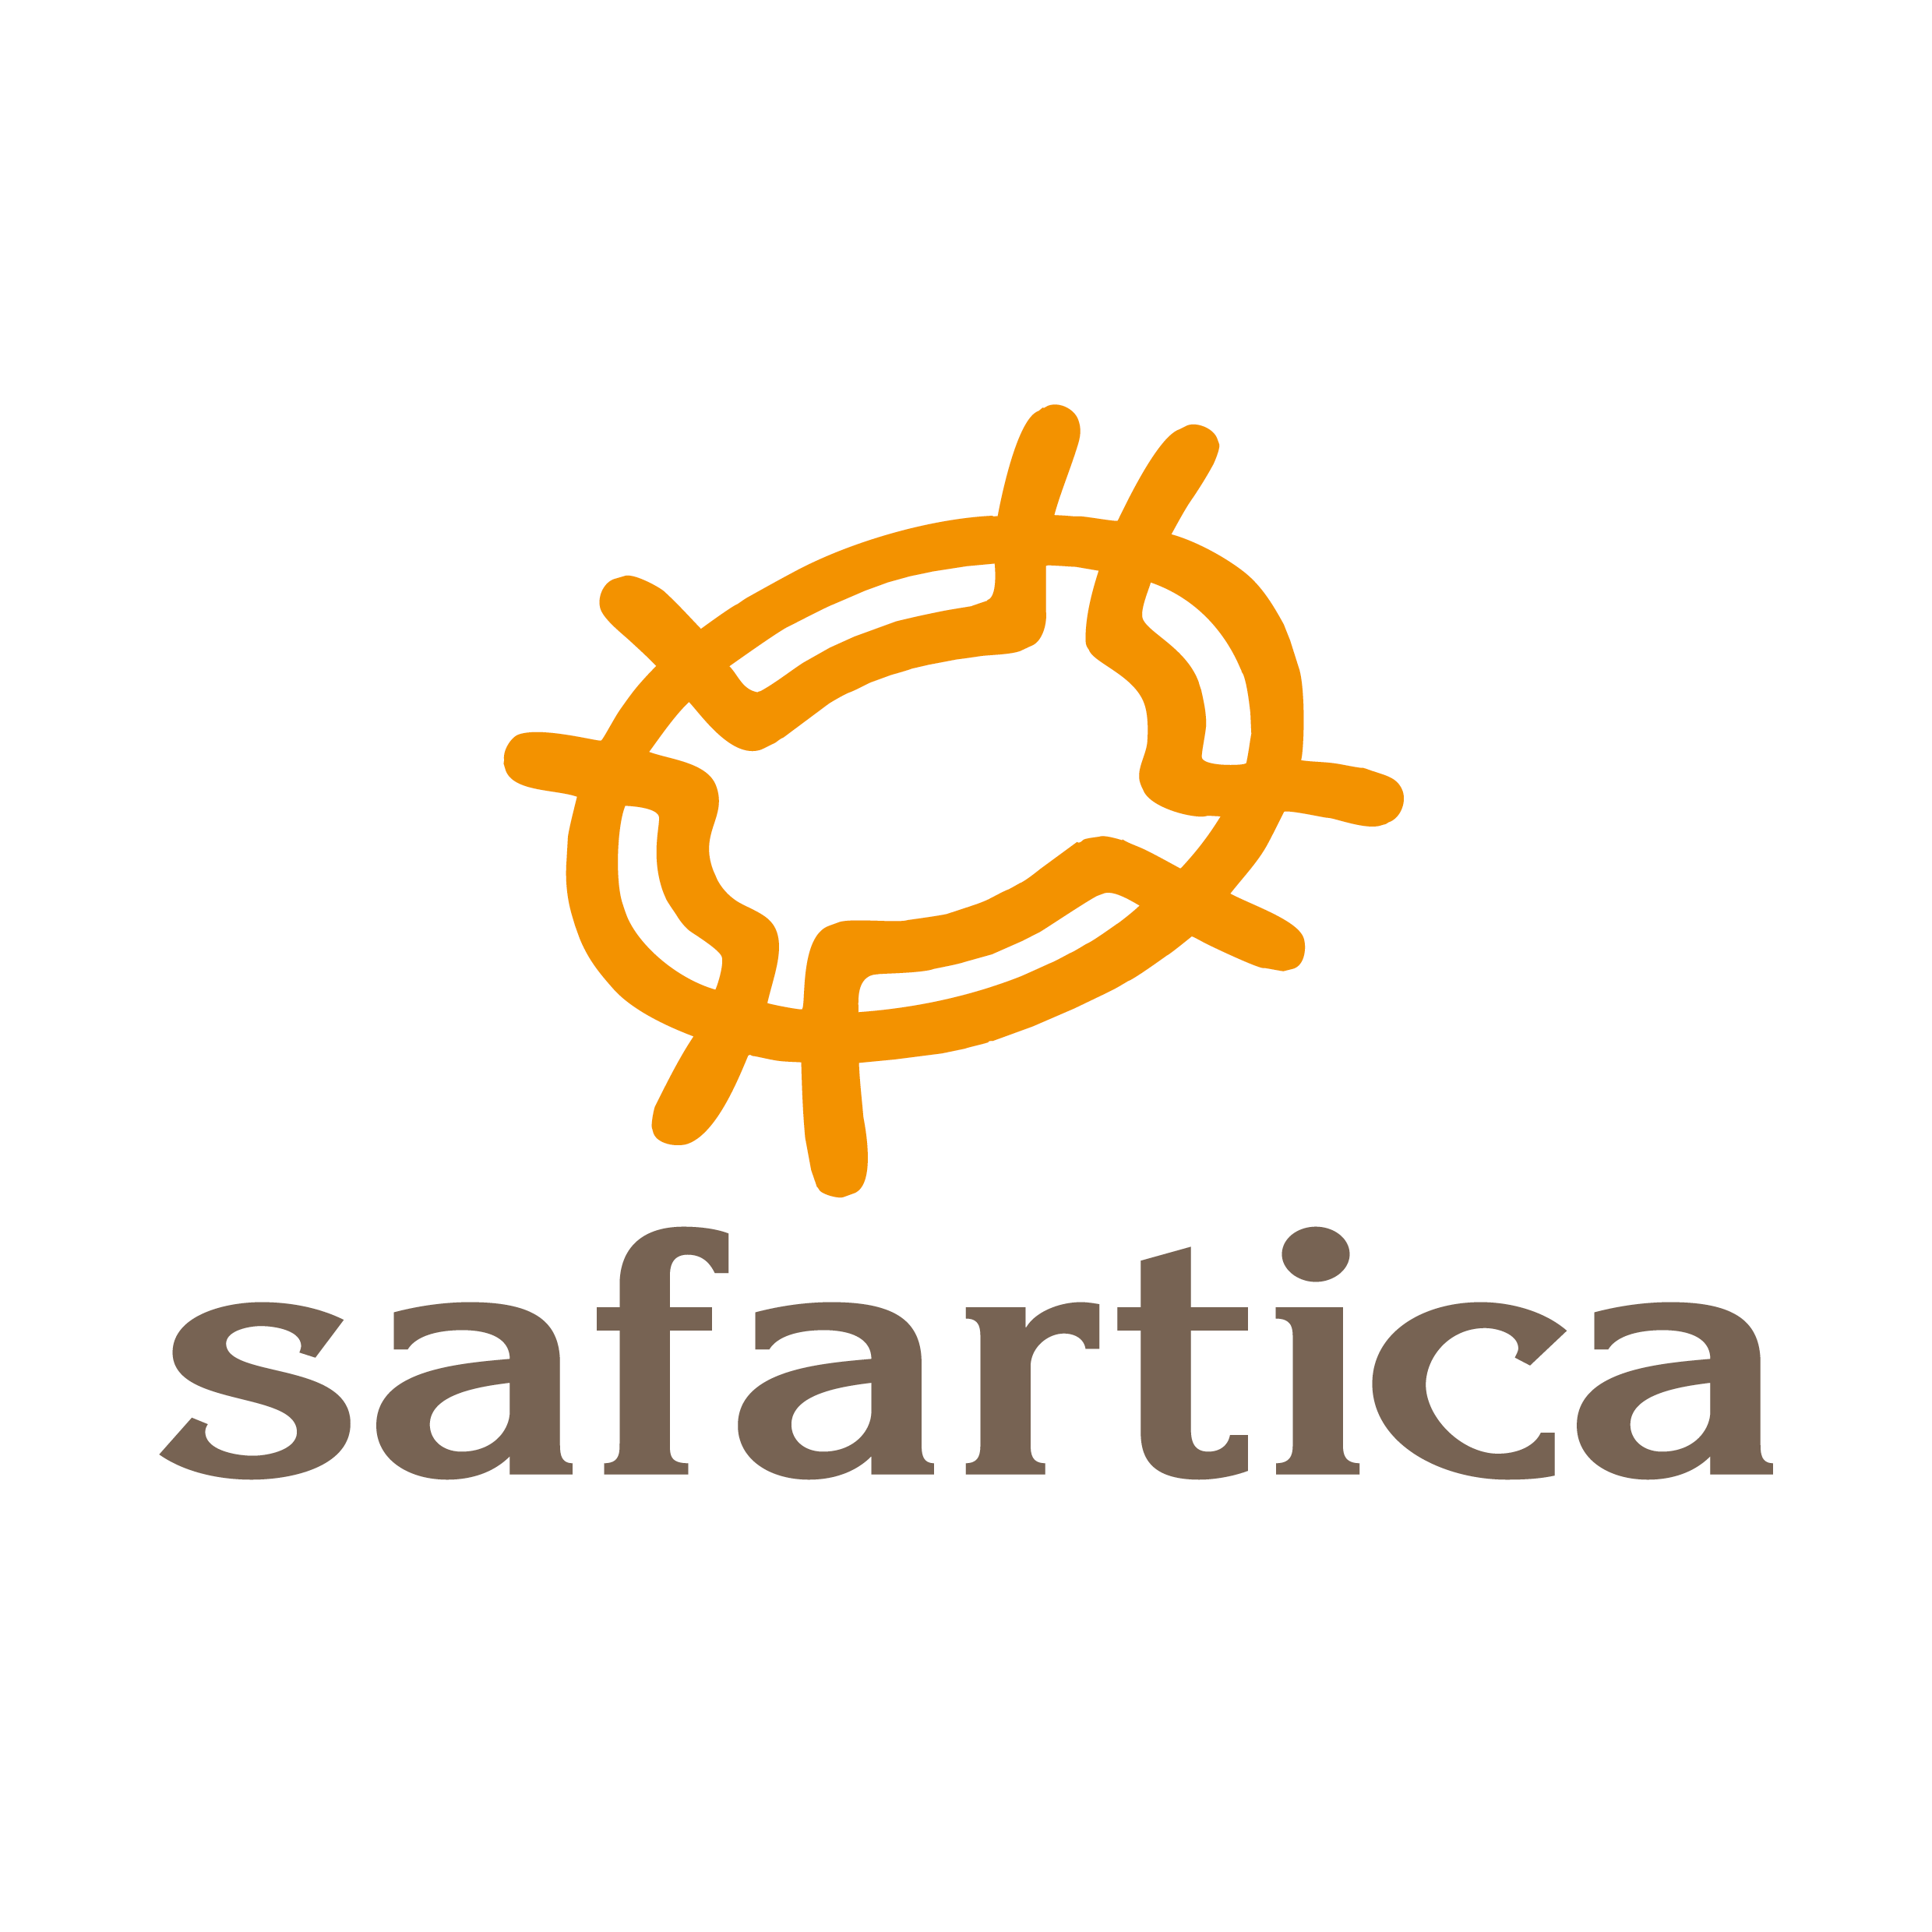 Safartica